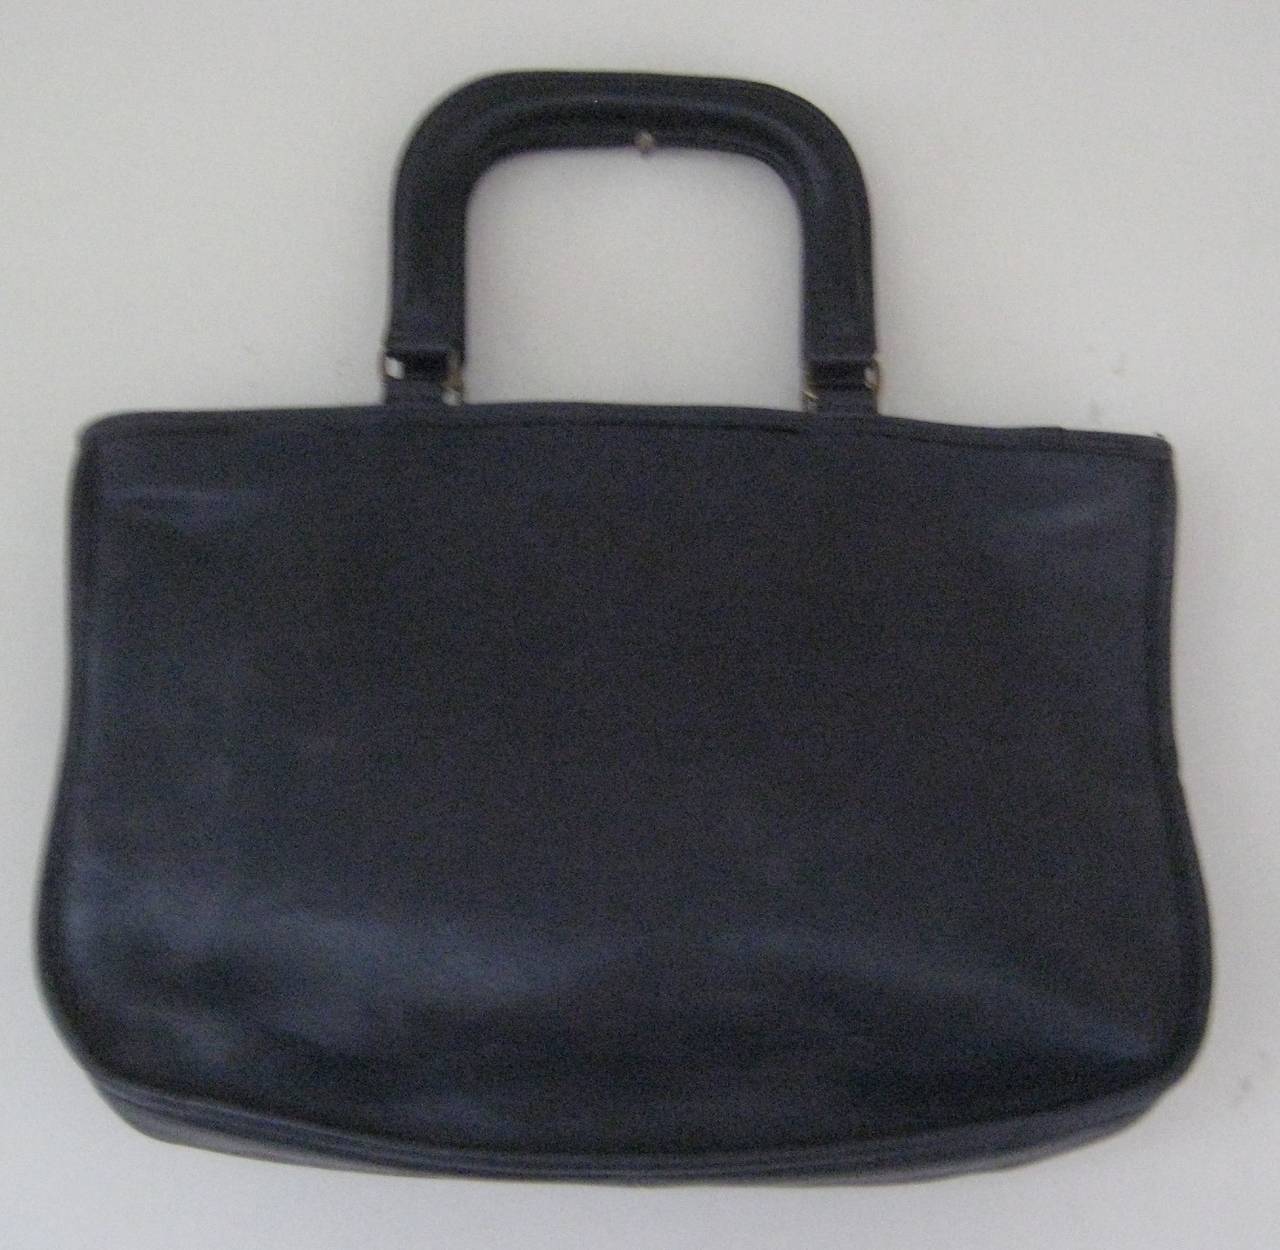 Classic Bonnie Cashin for Coach handbag 
Deep navy blue leather
Wide zipper closure
One exterior pocket 
One interior flap pocket 
This measures approx 14